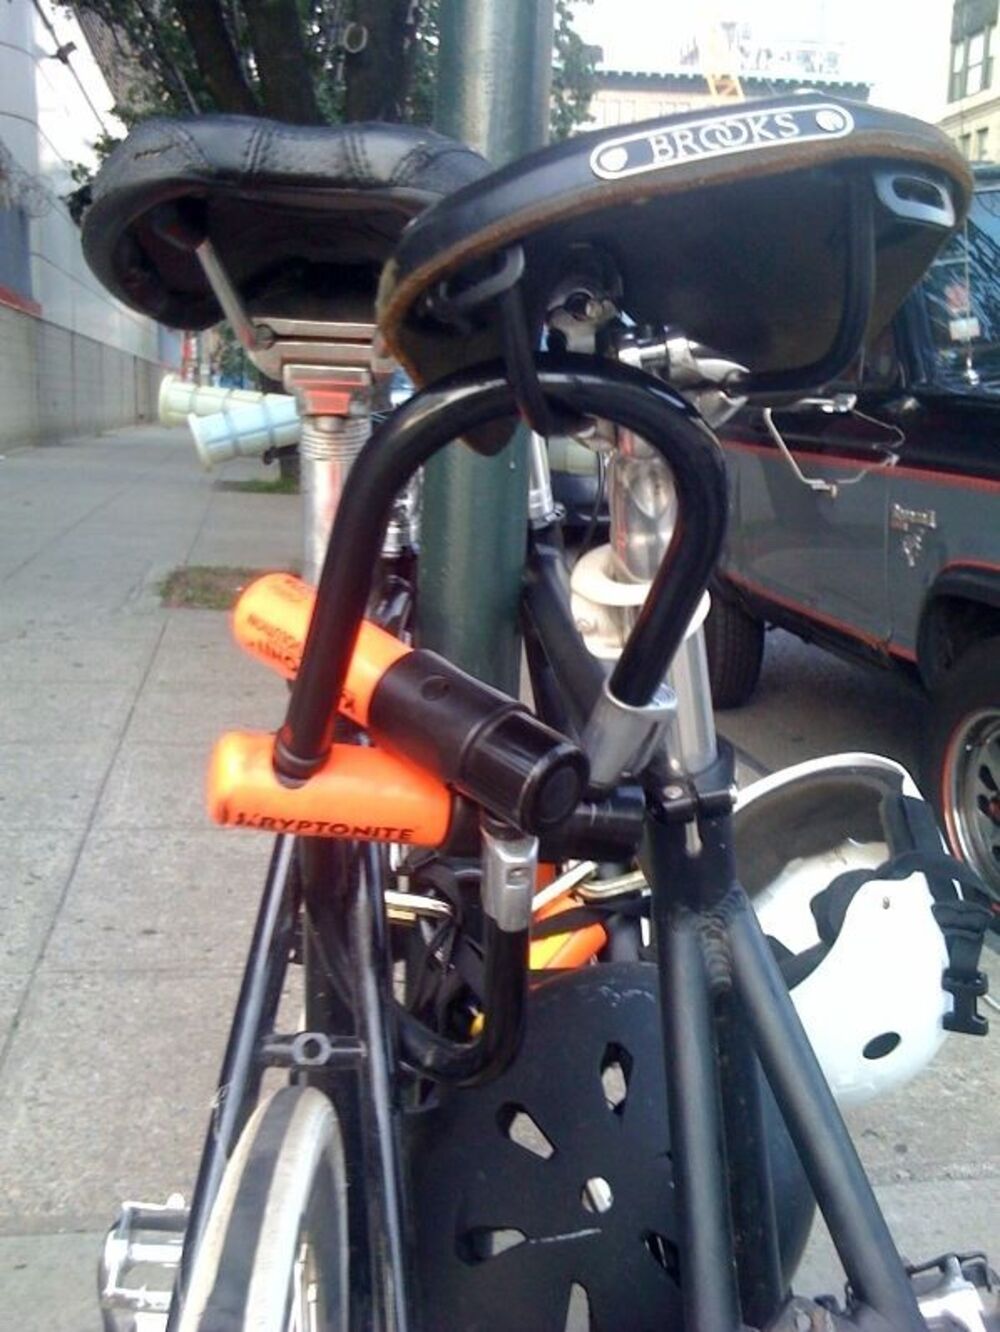 bike saddle lock